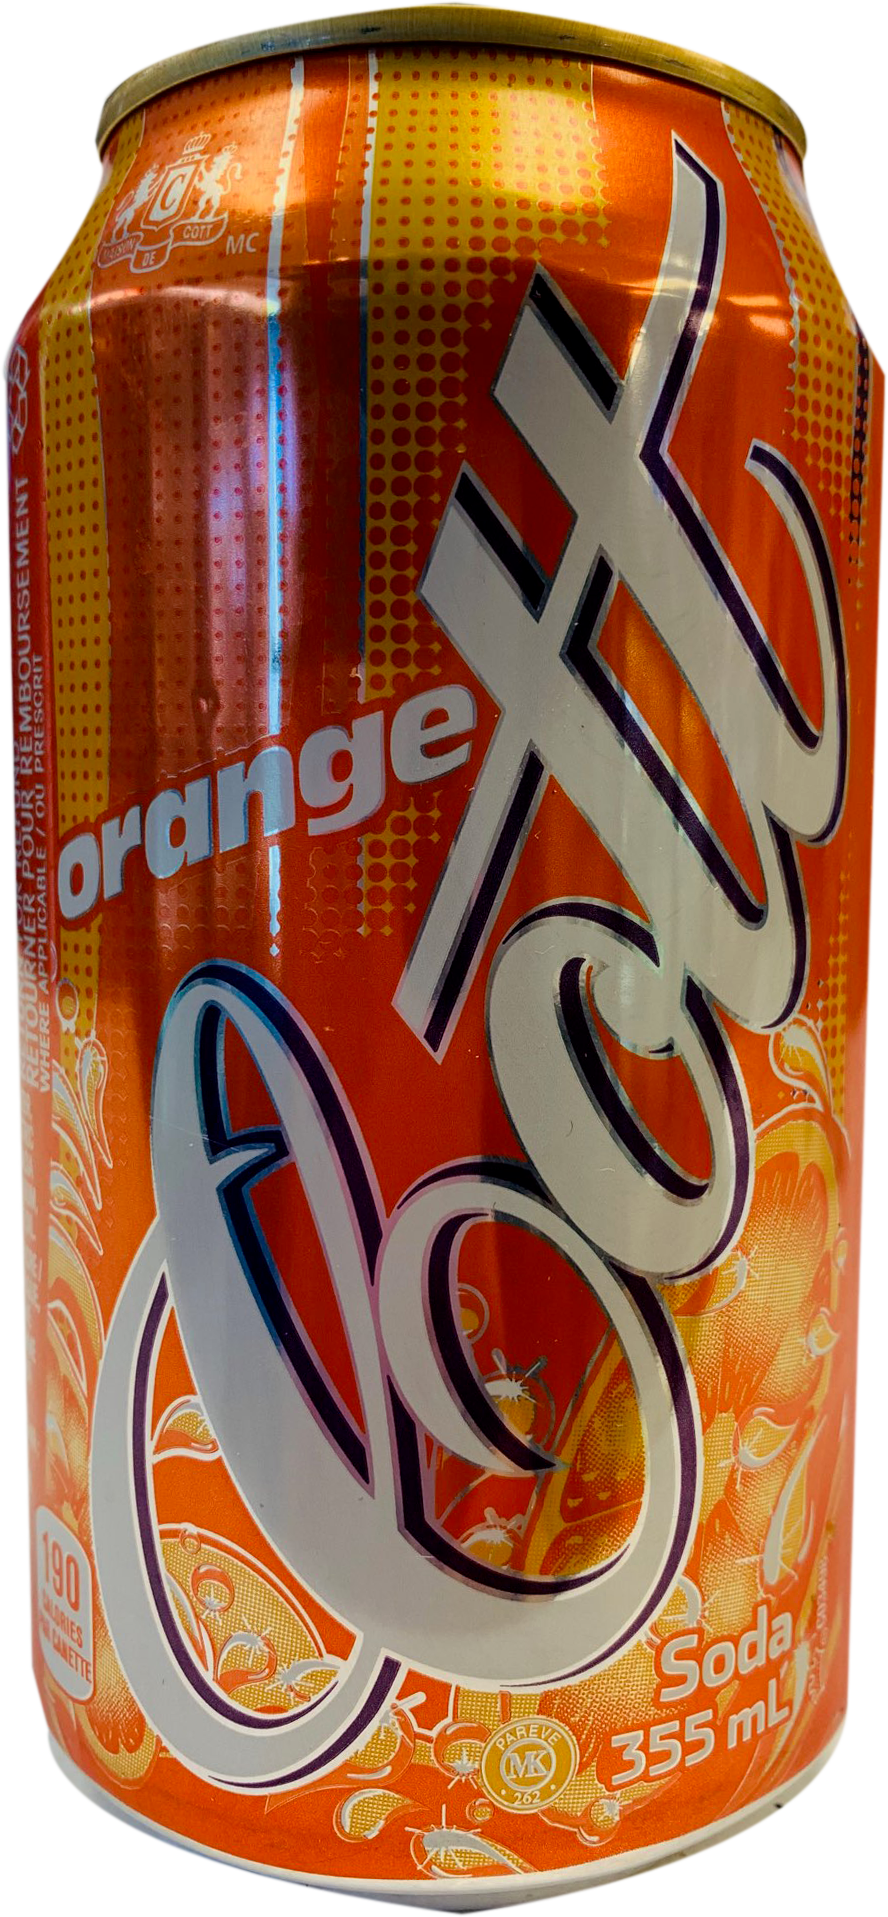 Cott - Orange (355ml Can)